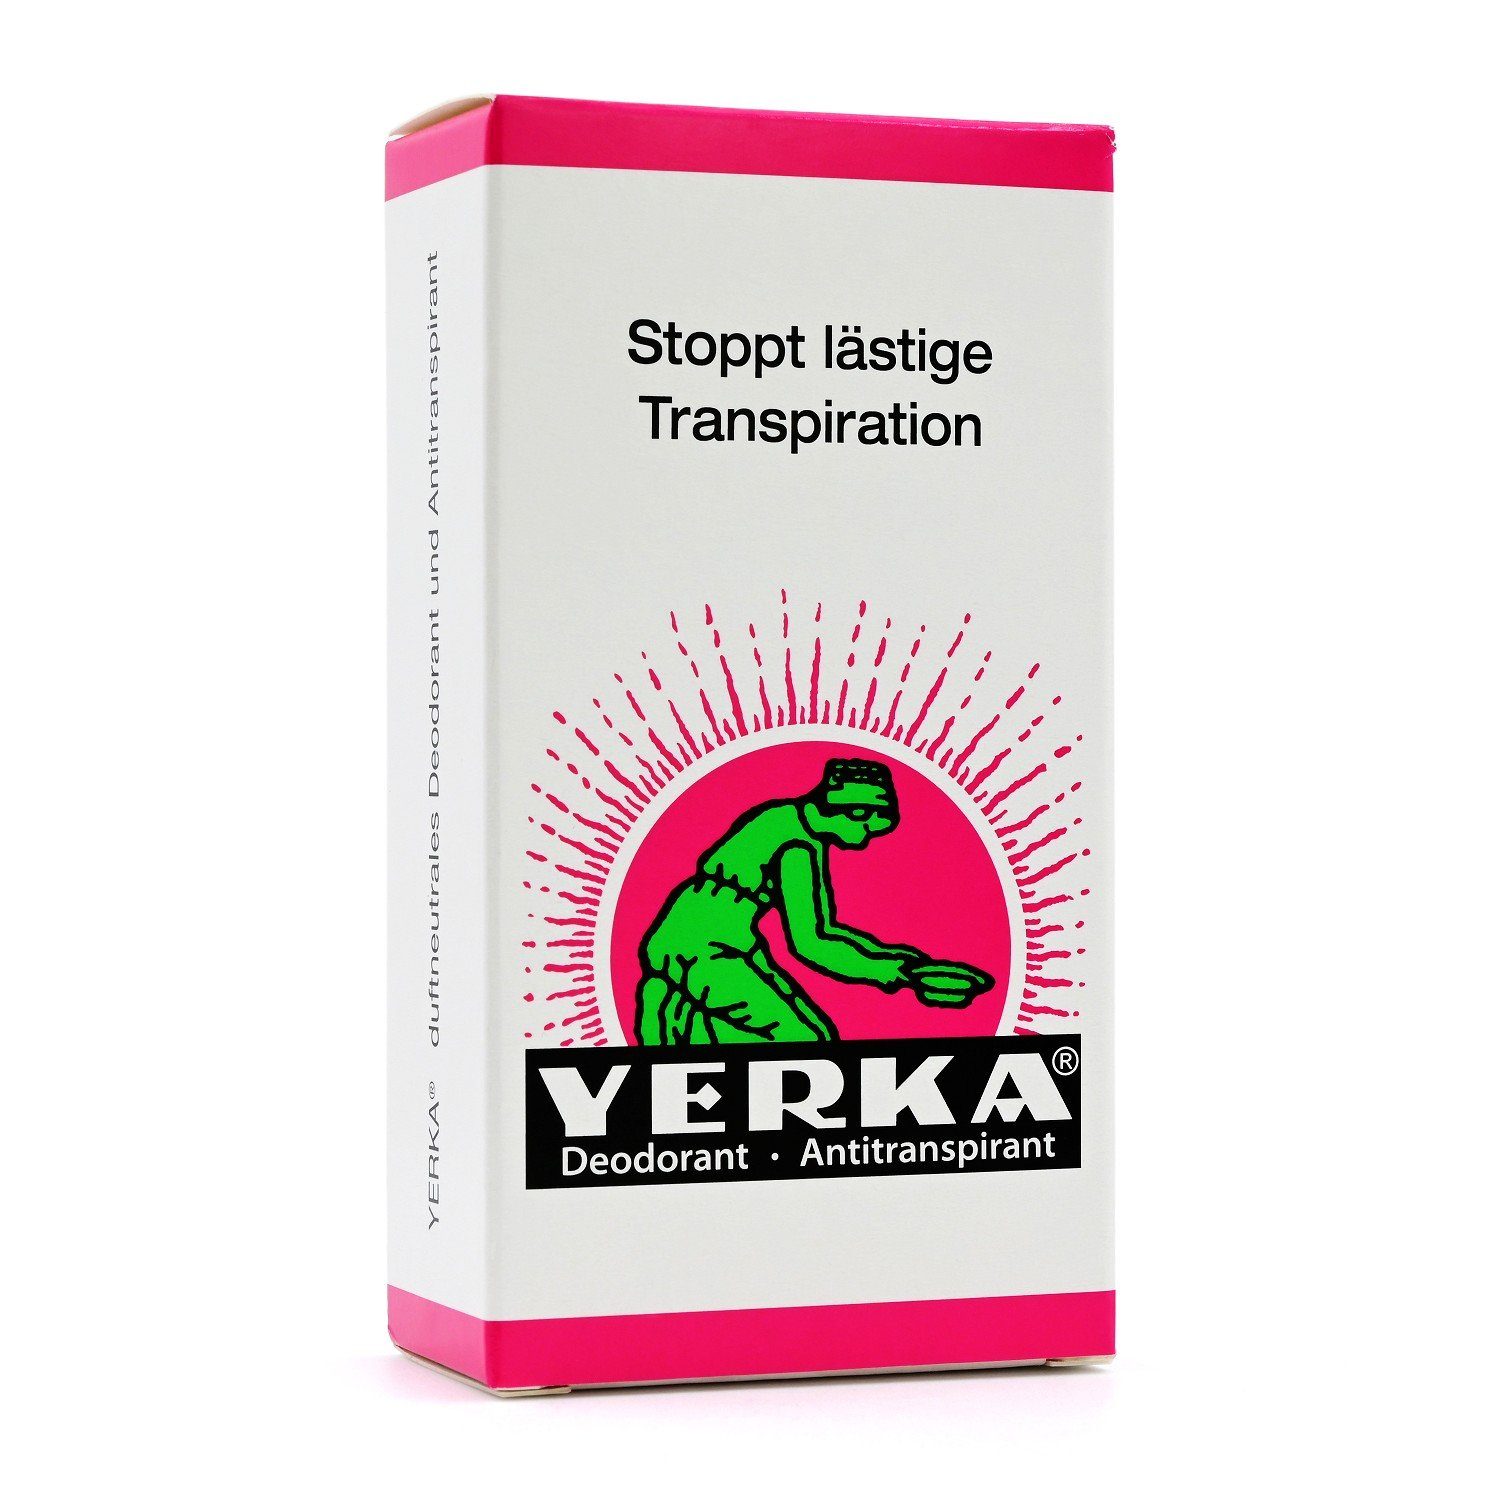 YERKA Kosmetik Deodorant YERKA Antitranspirant, Deo-Pumpspray 50 GmbH ml, Transpirant